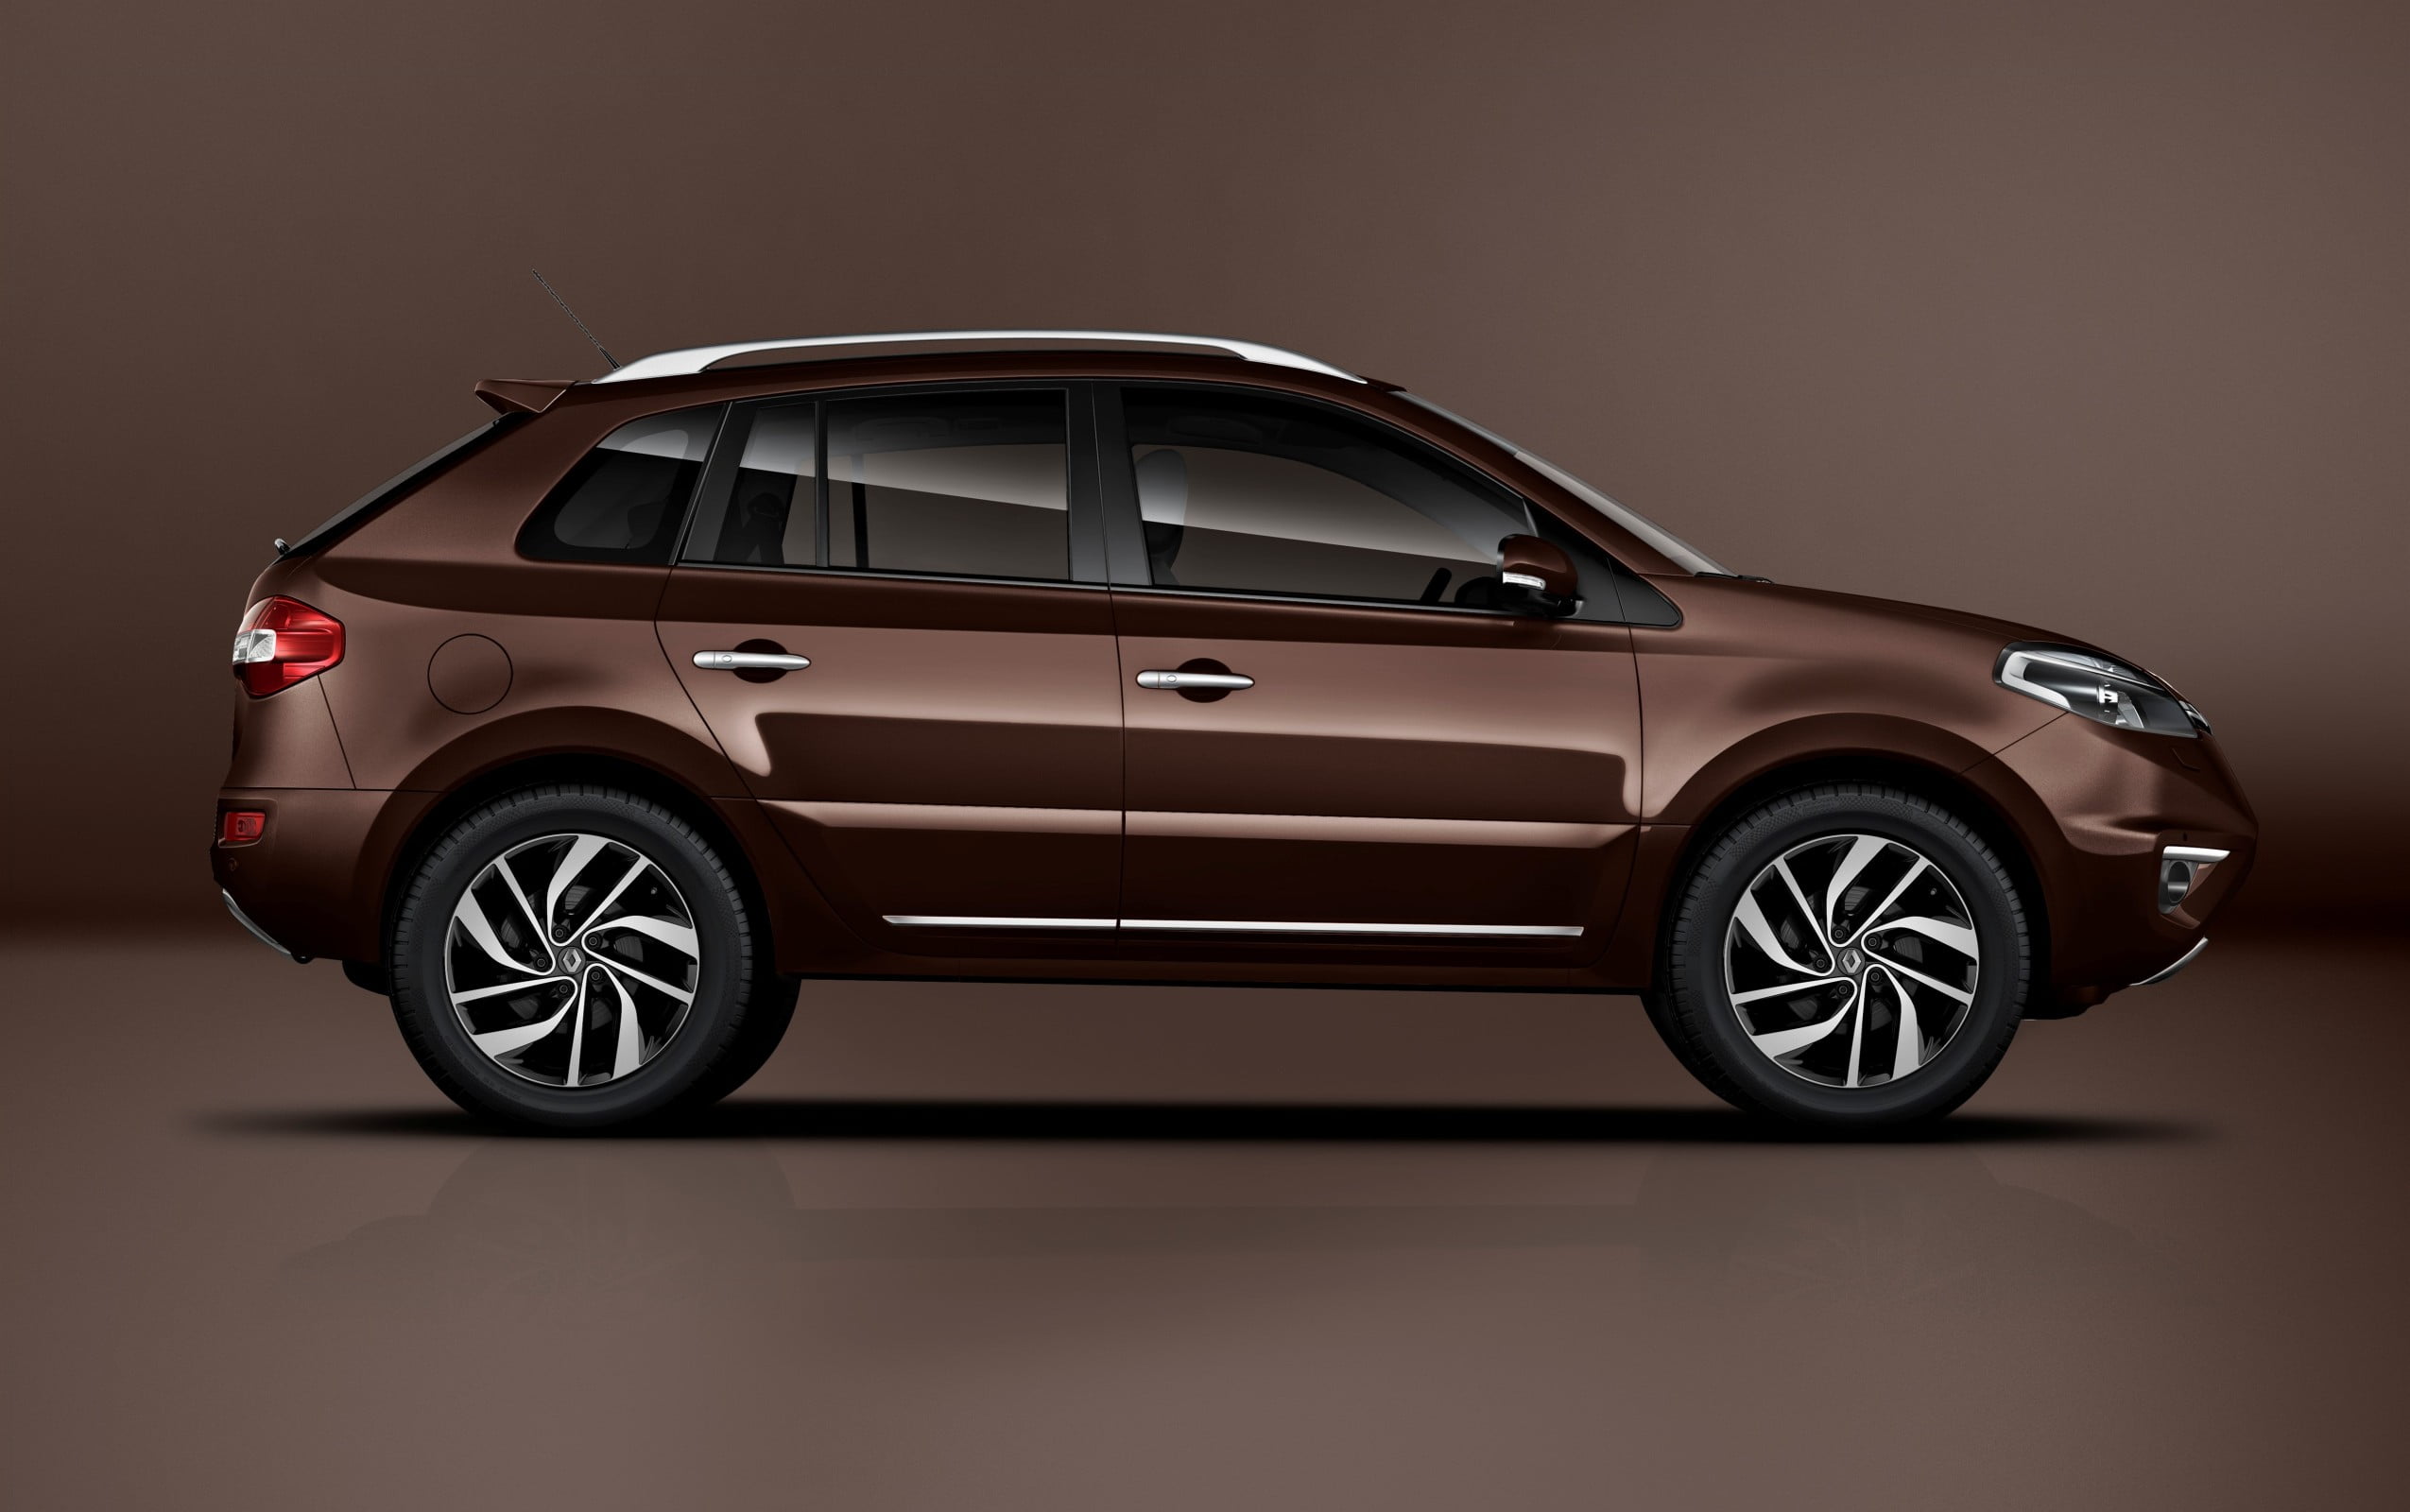 Renault Koleos 2013, brown SUV, Cars, motor vehicle, mode of transportation